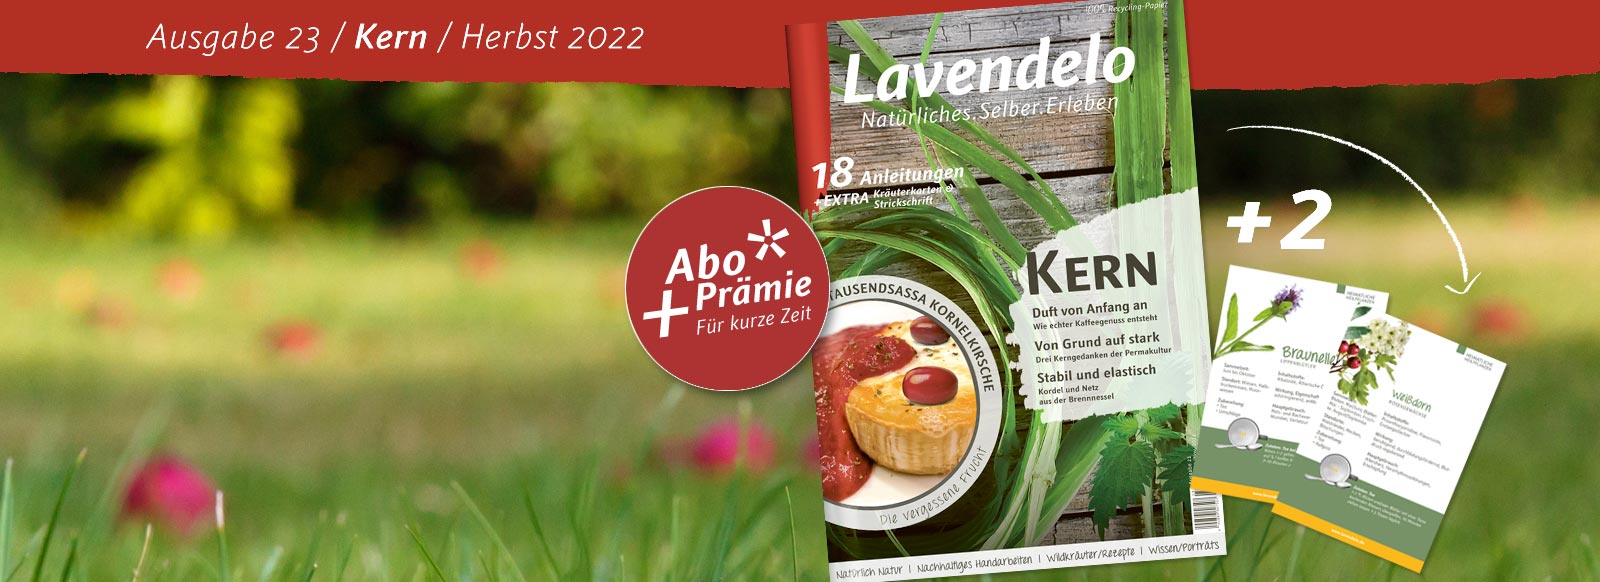 Lavendelo Herbst 2022 Ausgabe 23 "Kern"